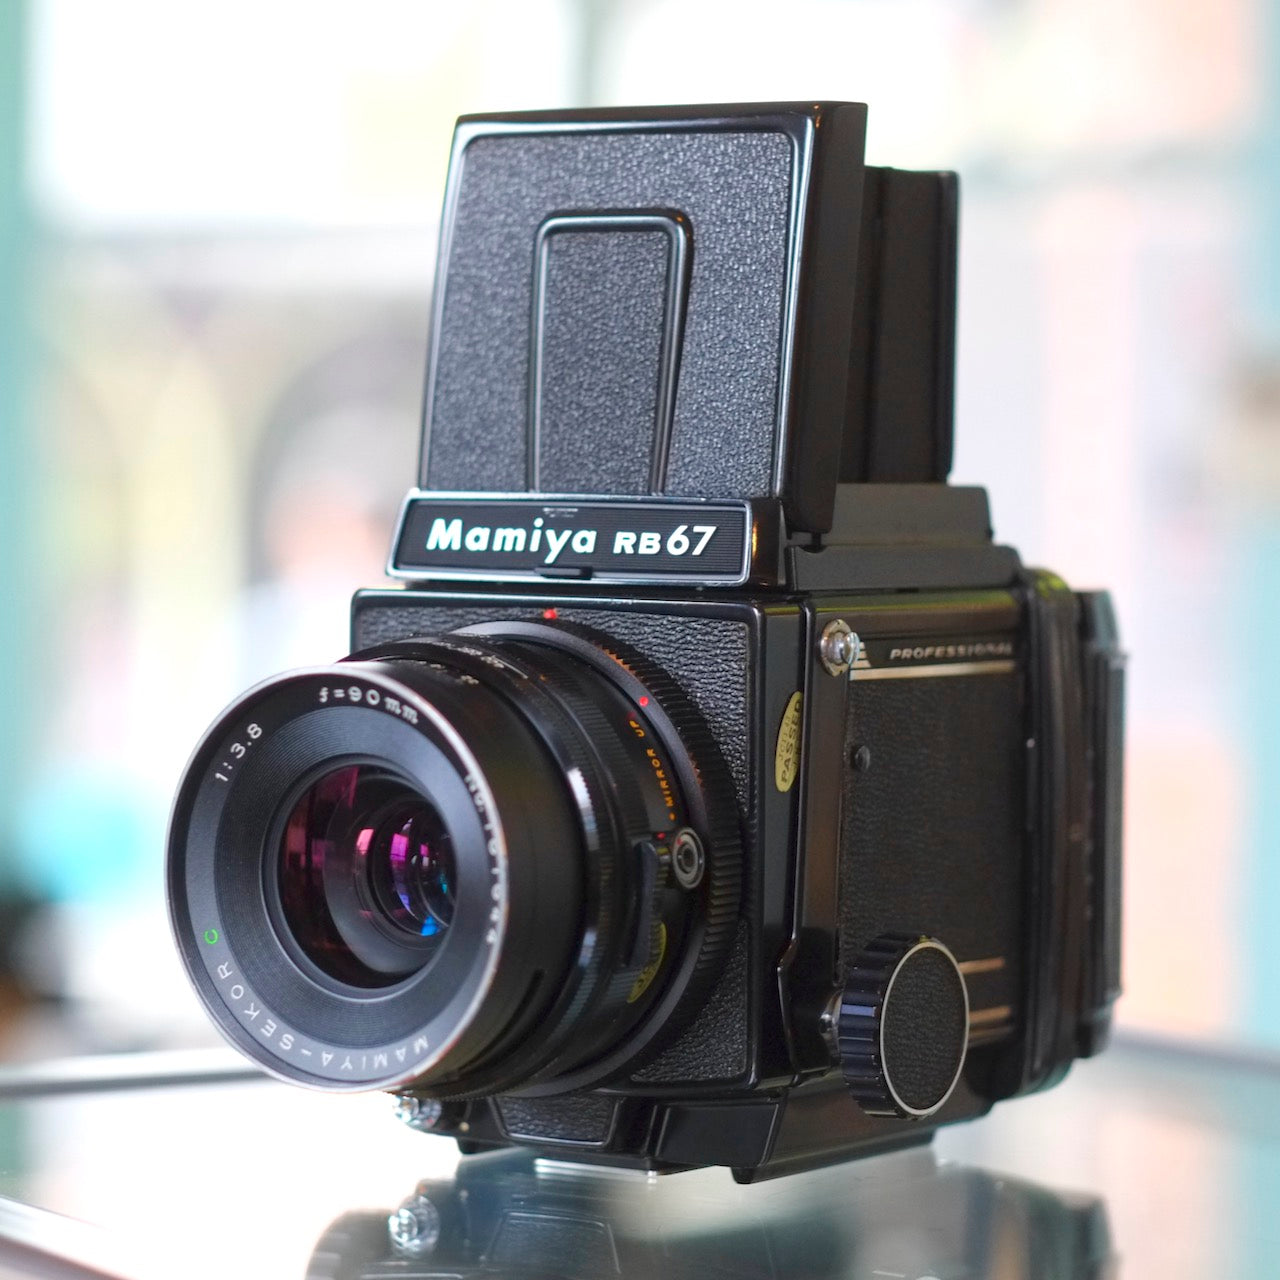 Mamiya RB67 Professional with Mamiya-Sekor C 90mm f3.8 lens